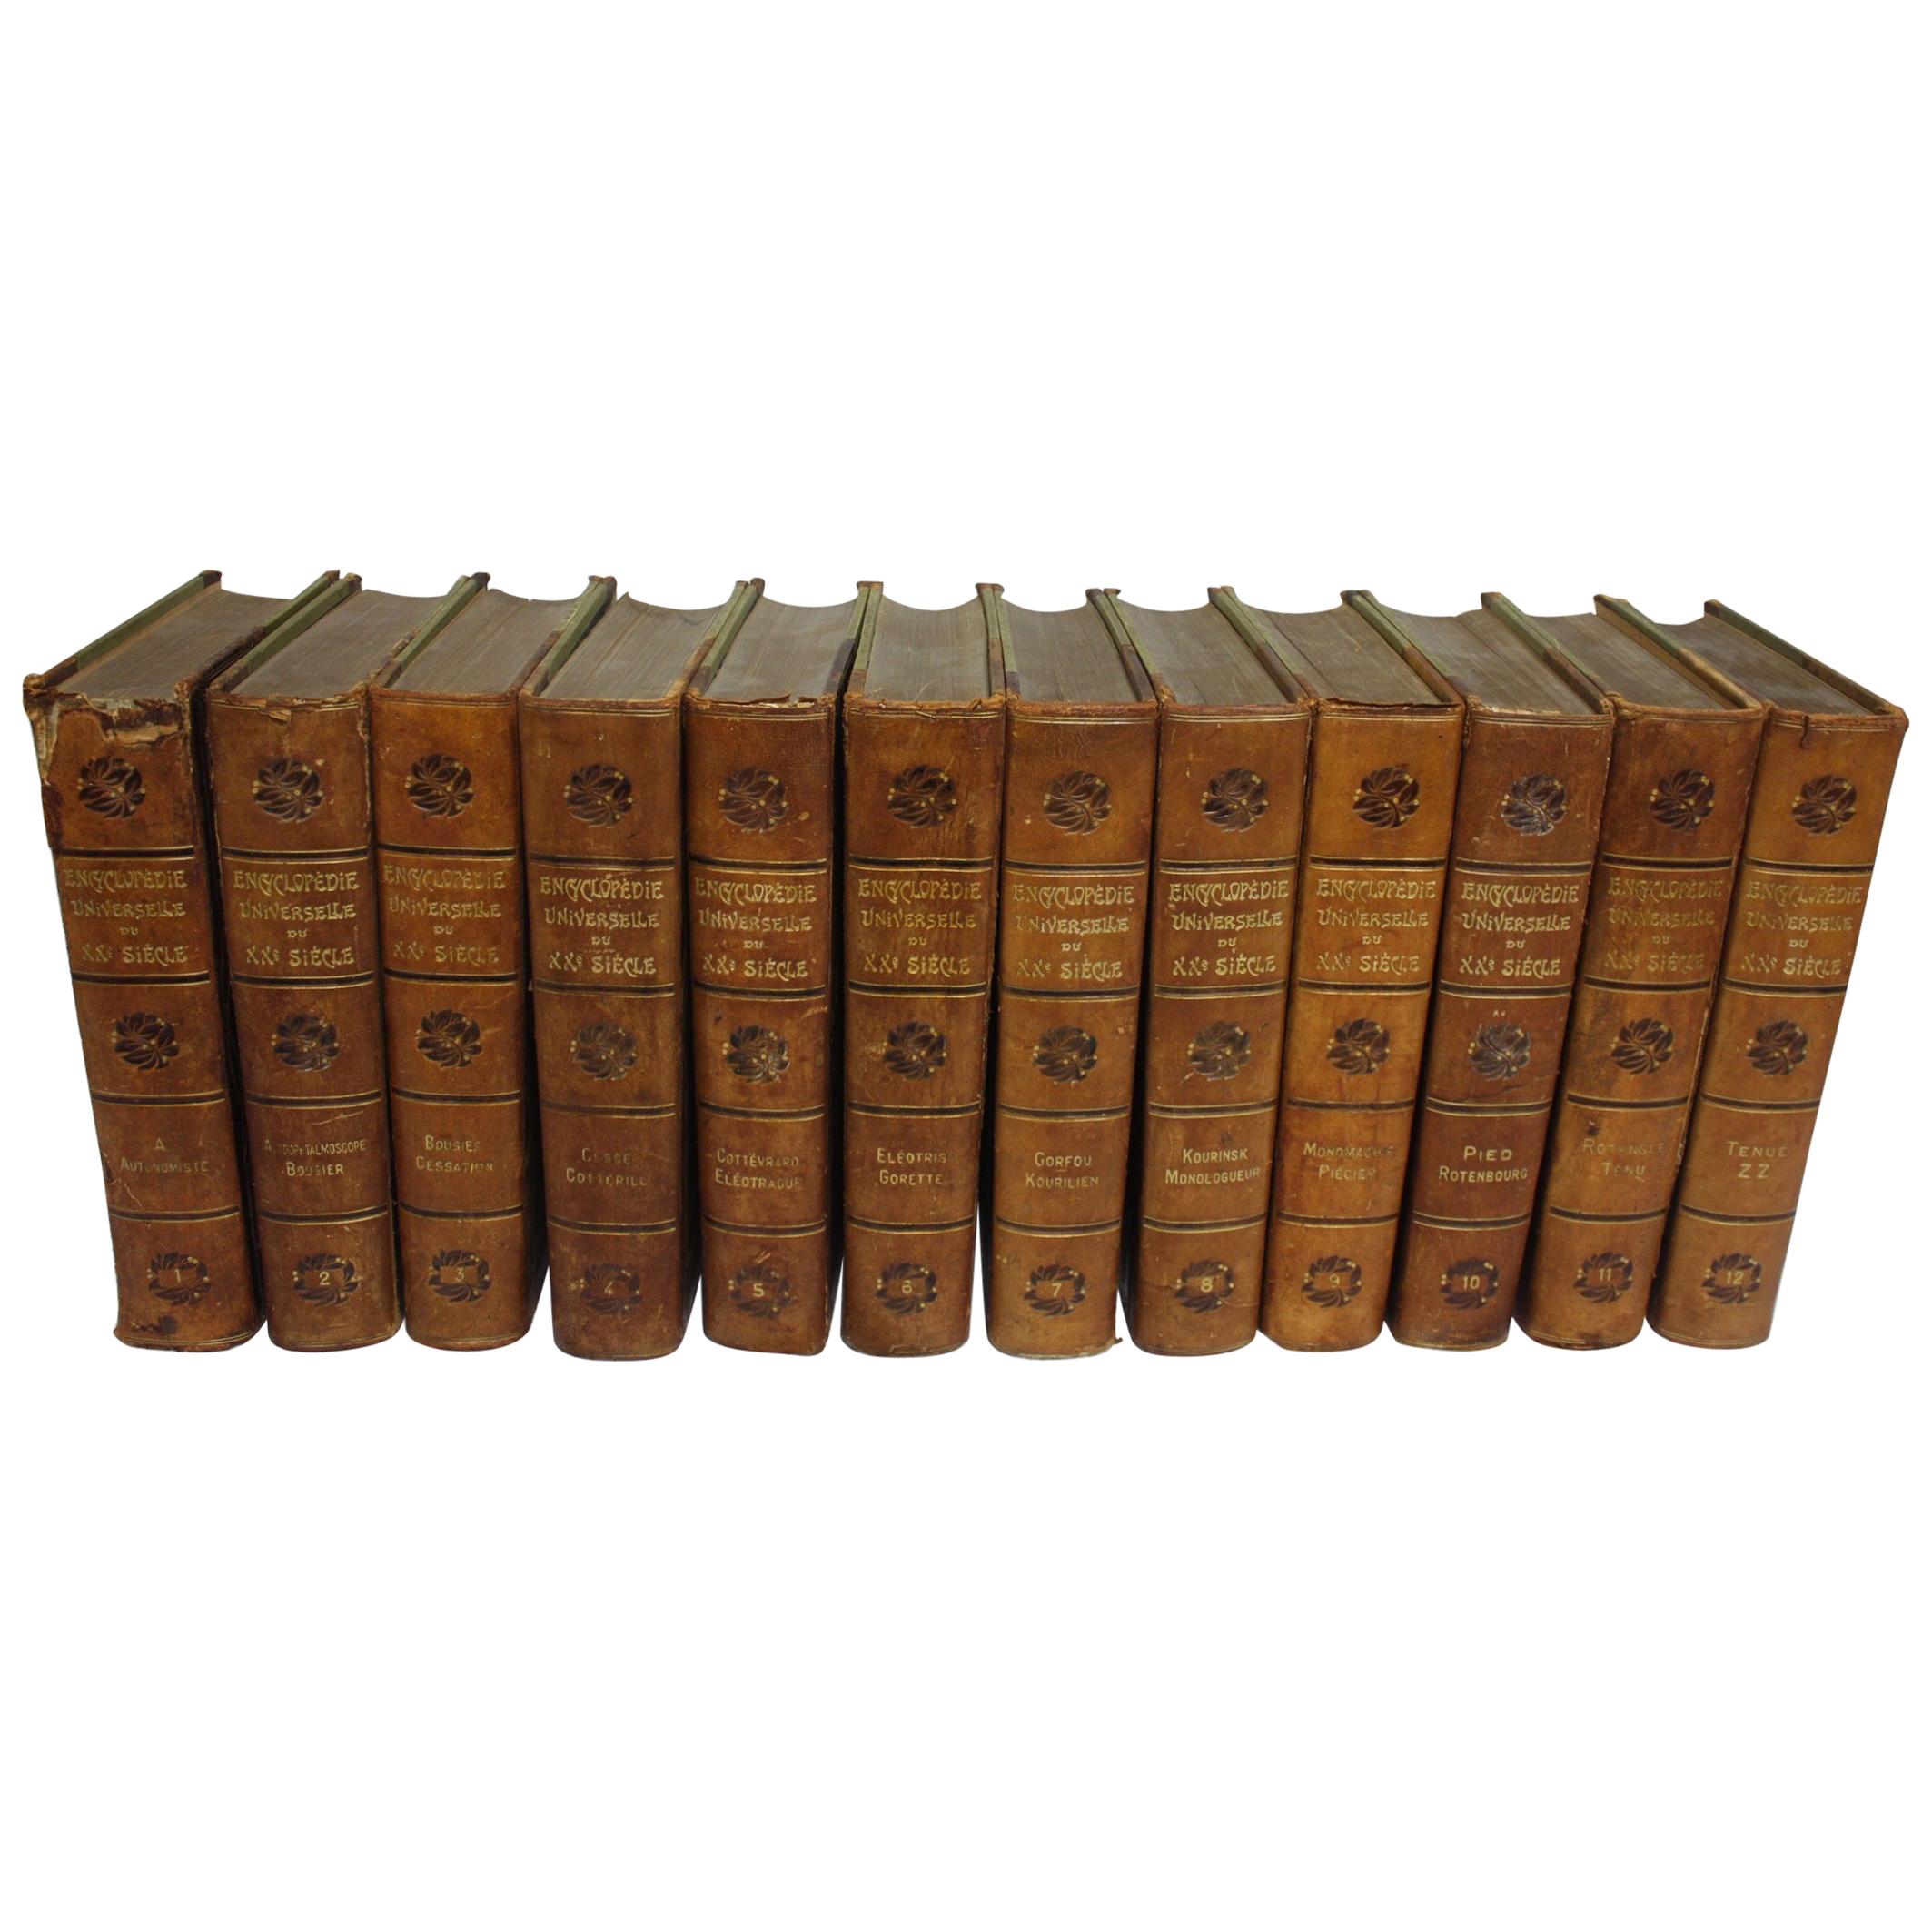 „Encyclopedie Universelle“, datiert 1908, frühes 20. Jahrhundert